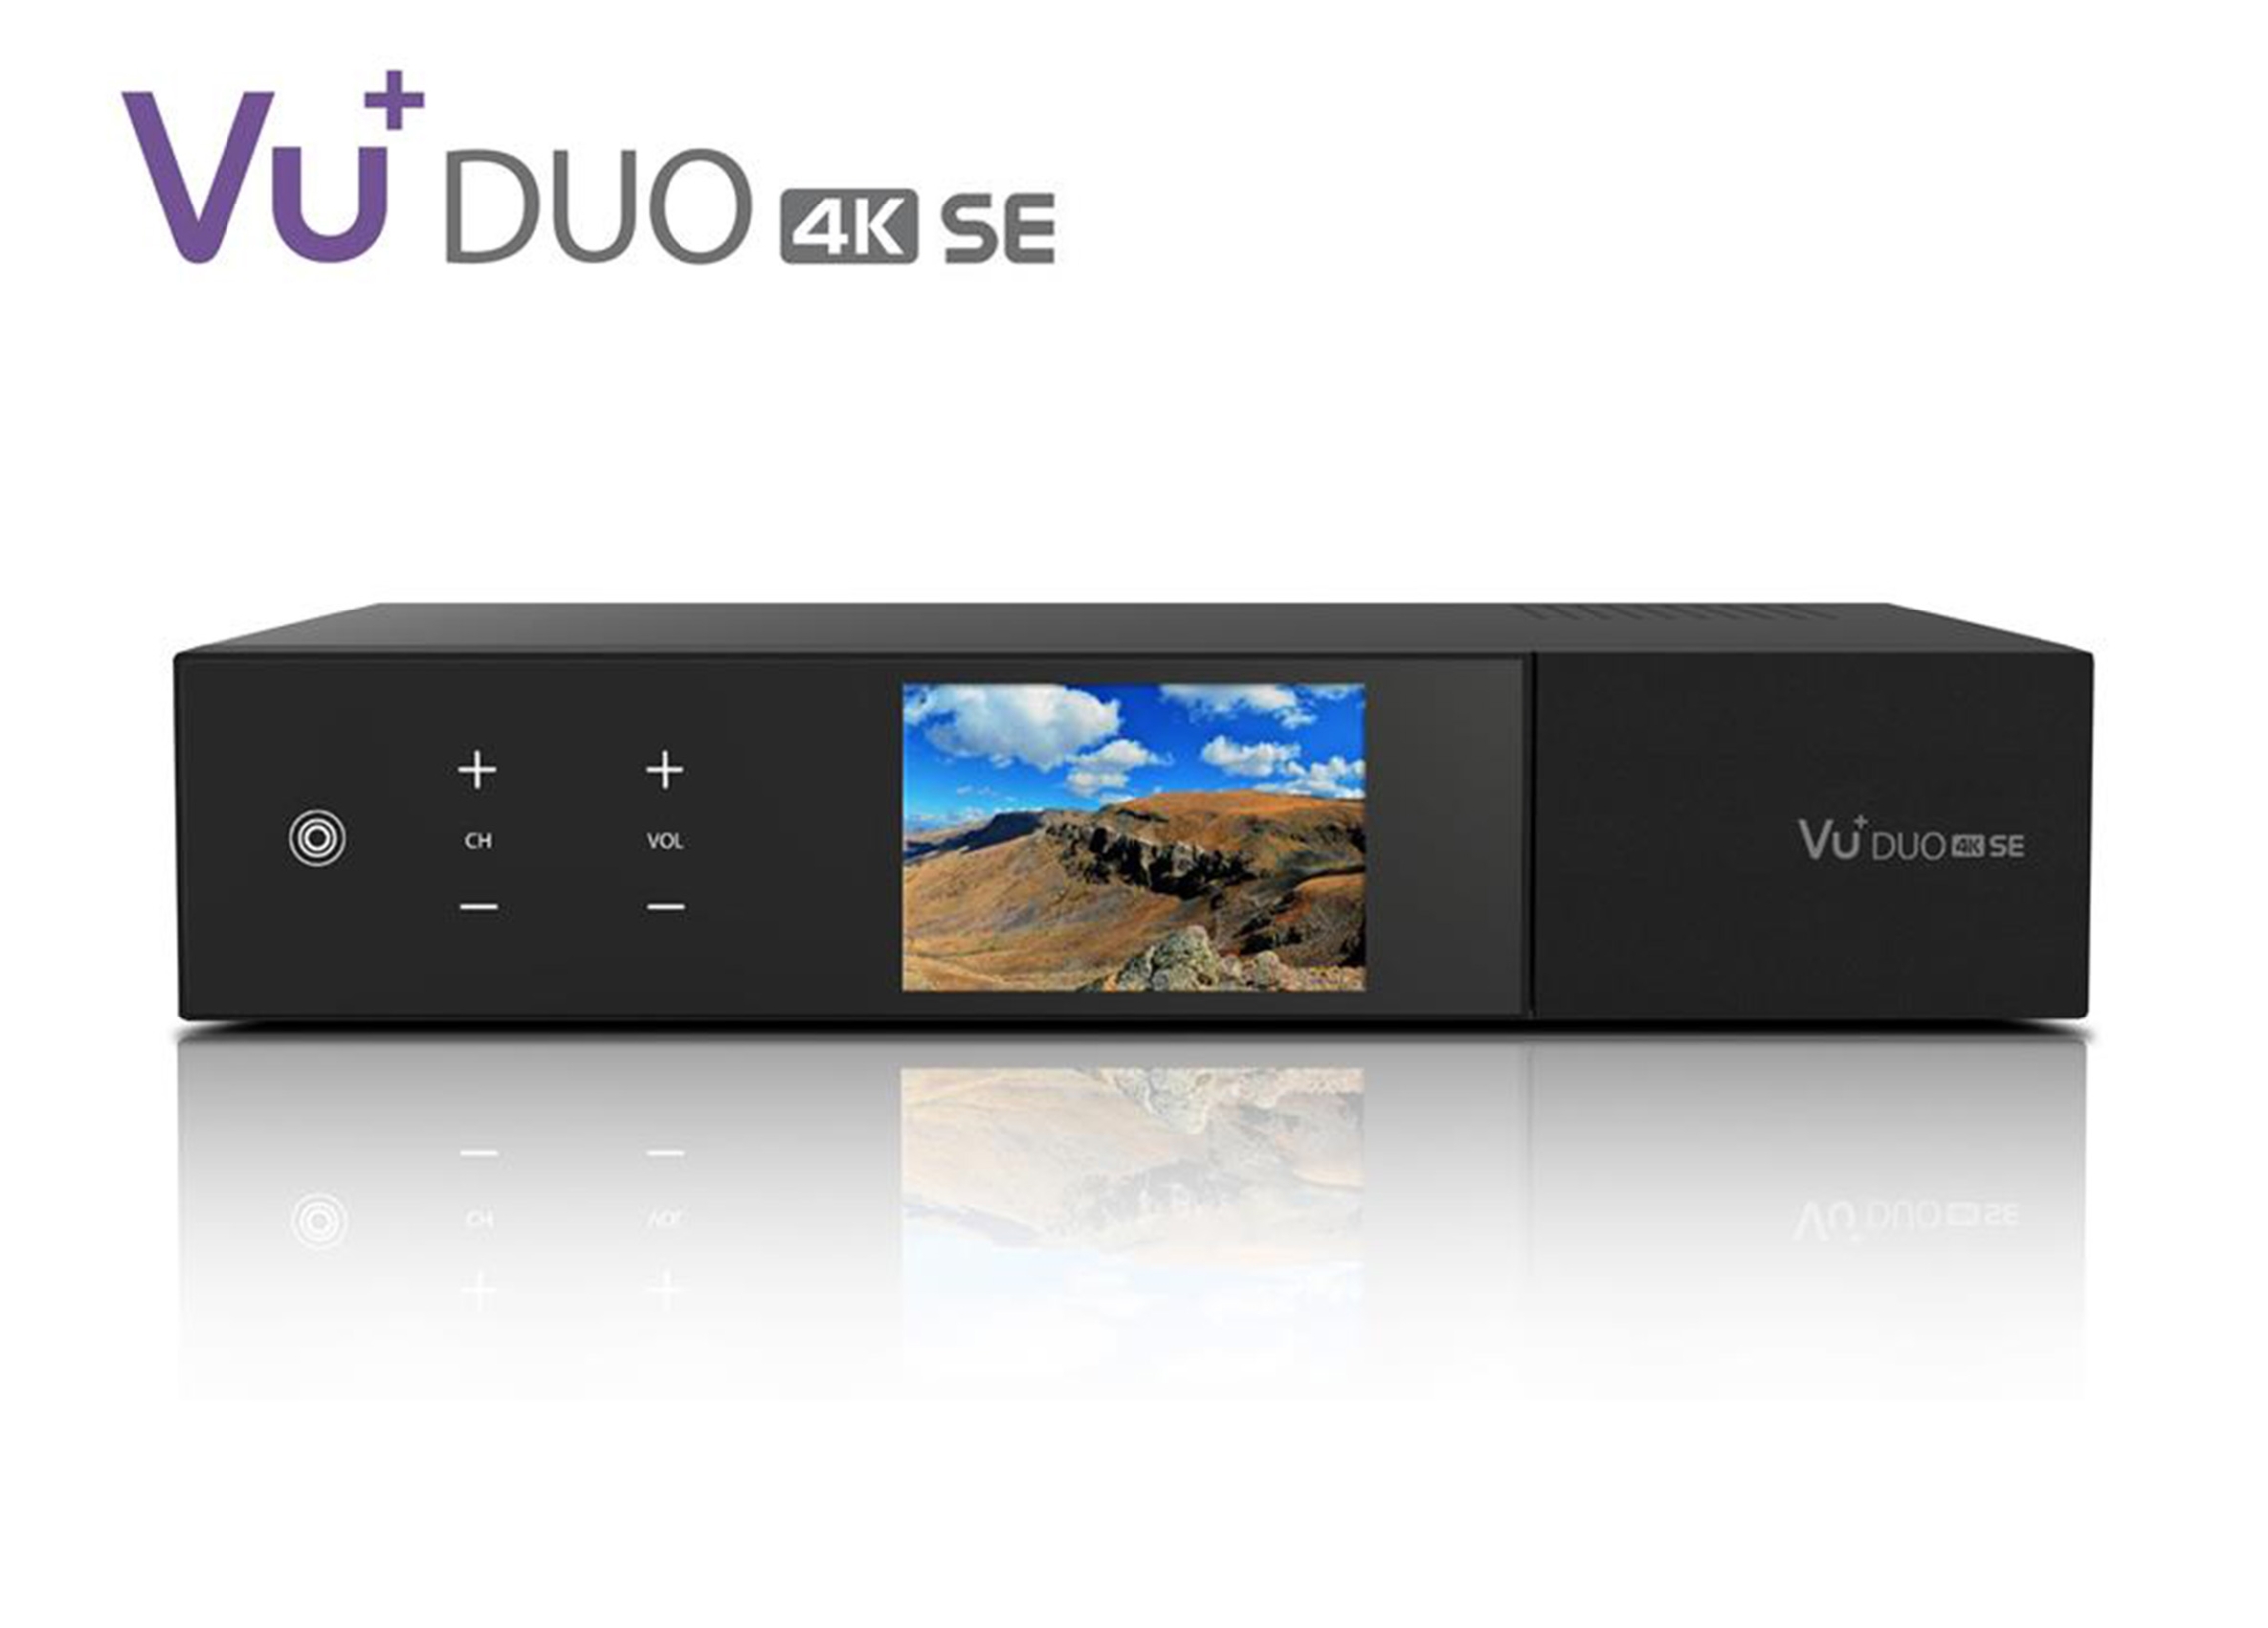 VU+ Duo 4K SE 2x DVB-T2 Dual PVR ready Linux Receiver